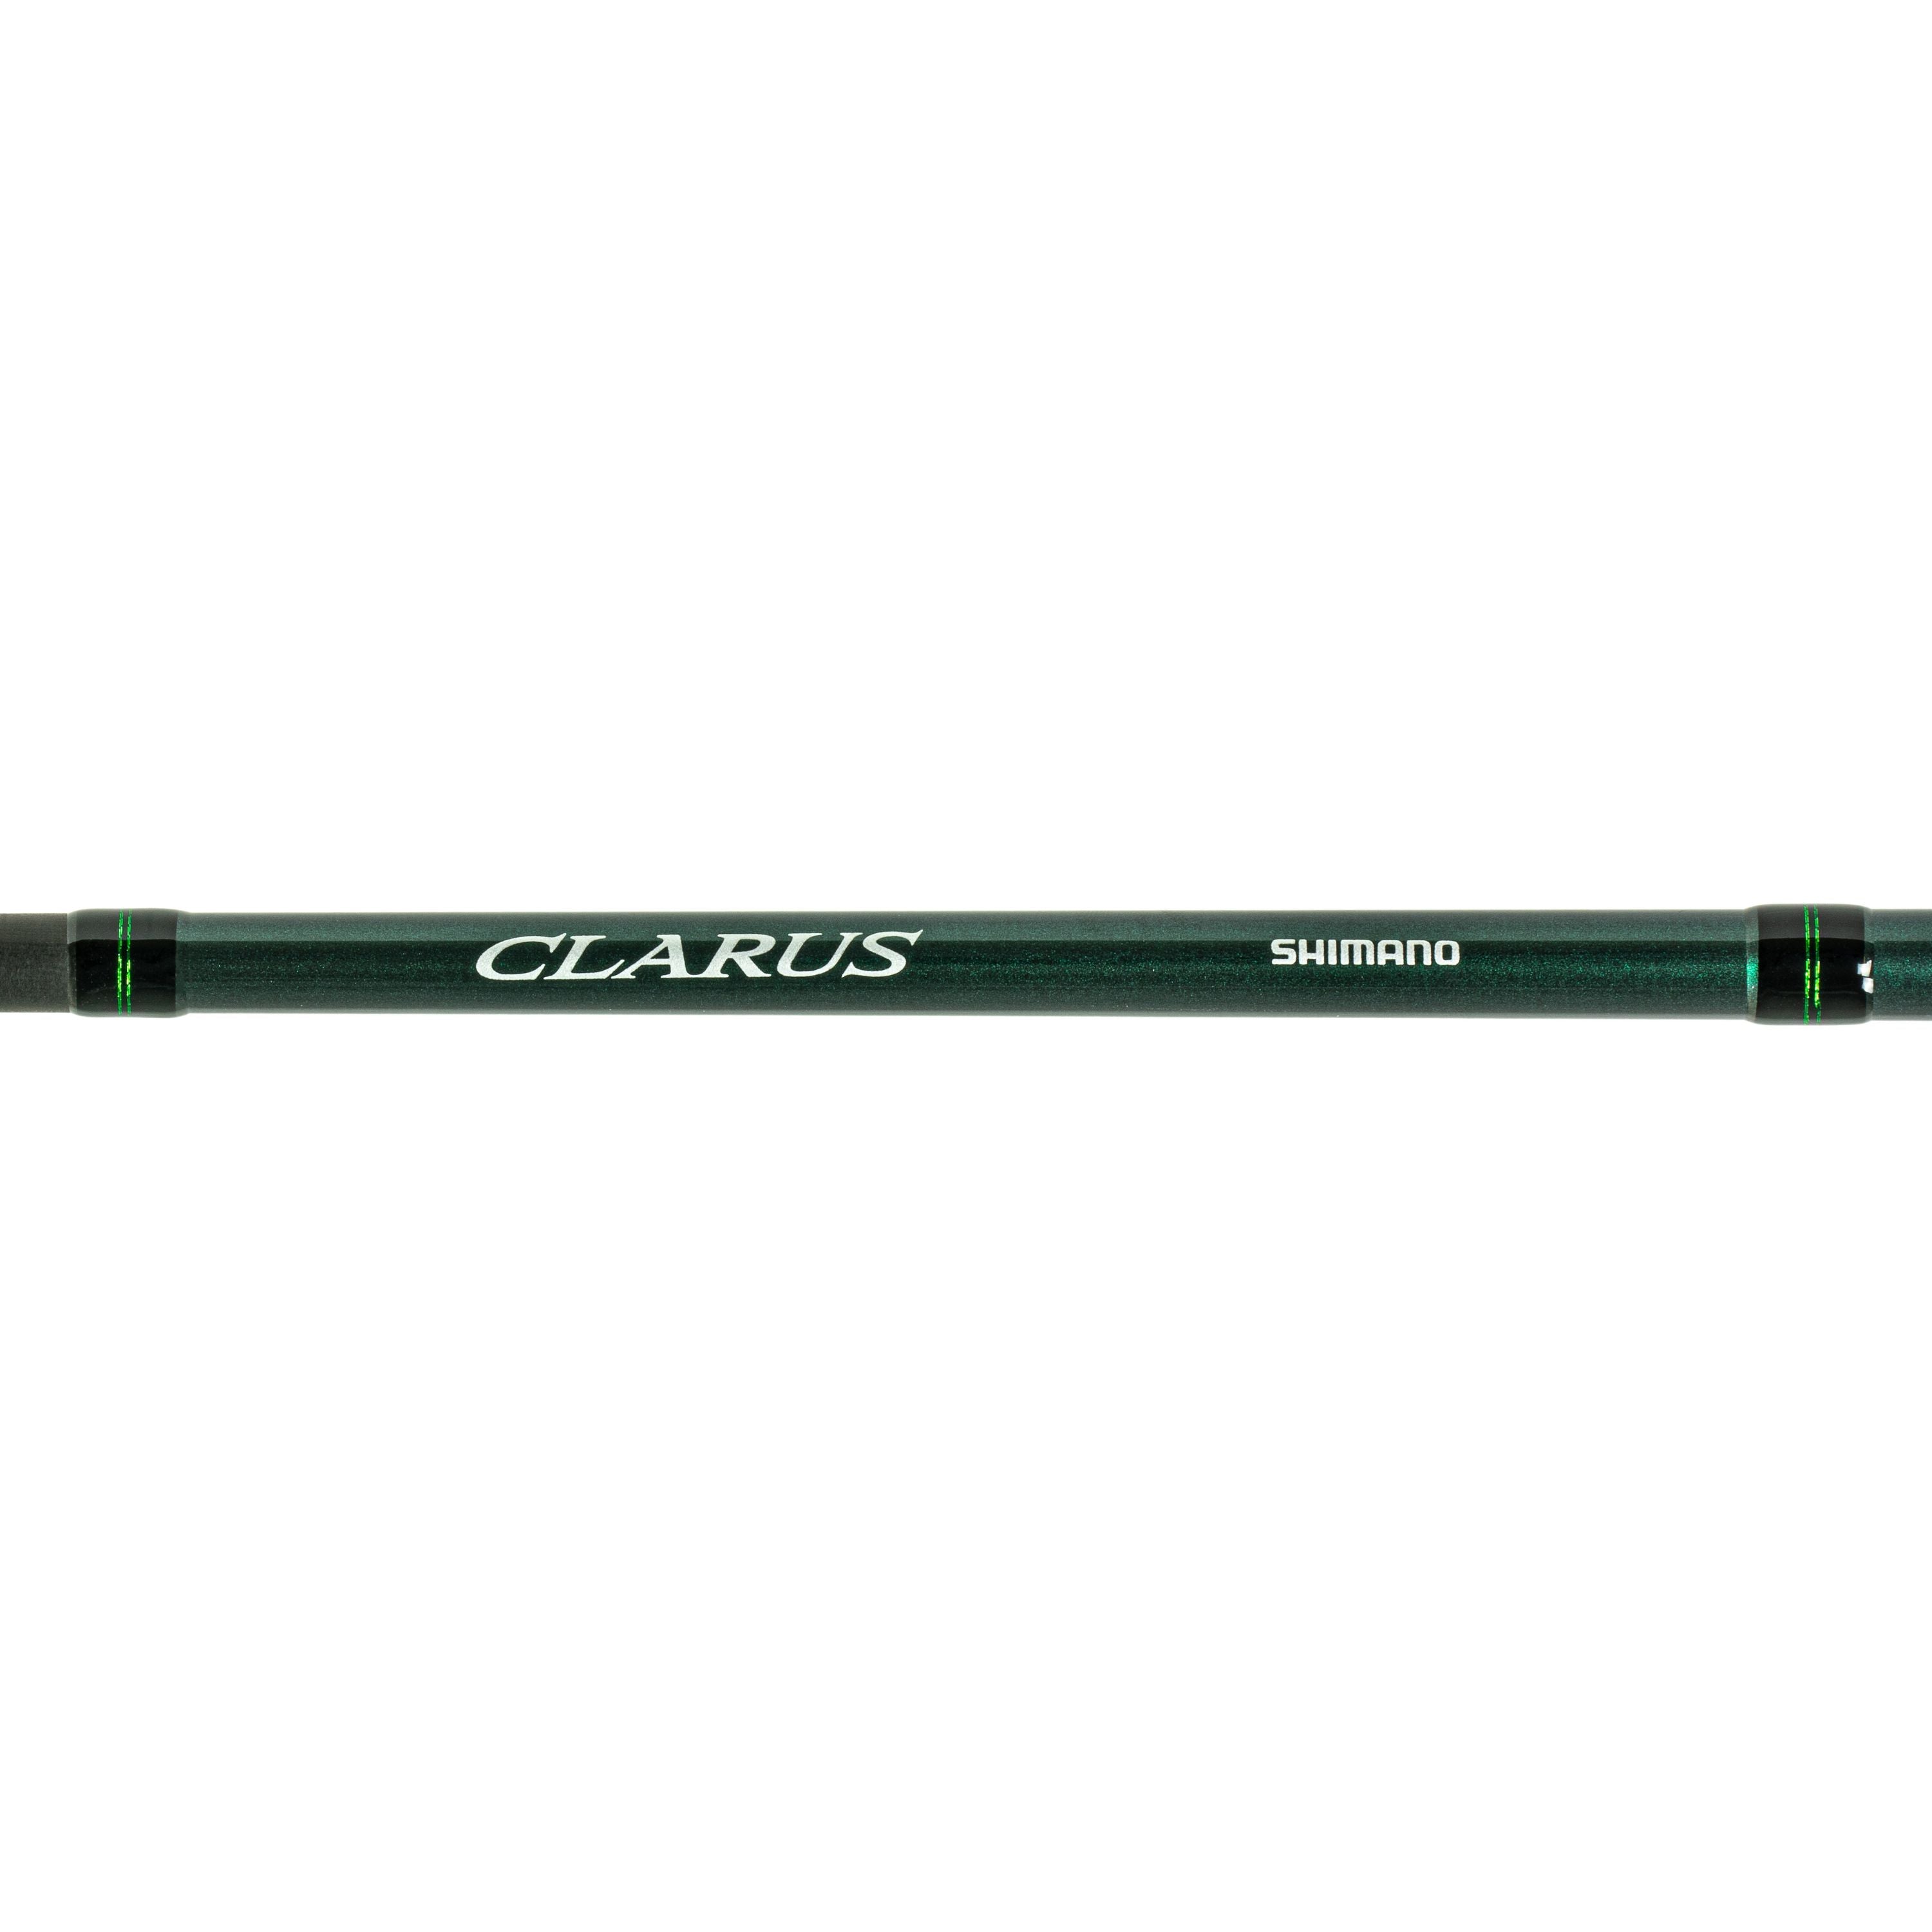 "Clarus" Spinning rod